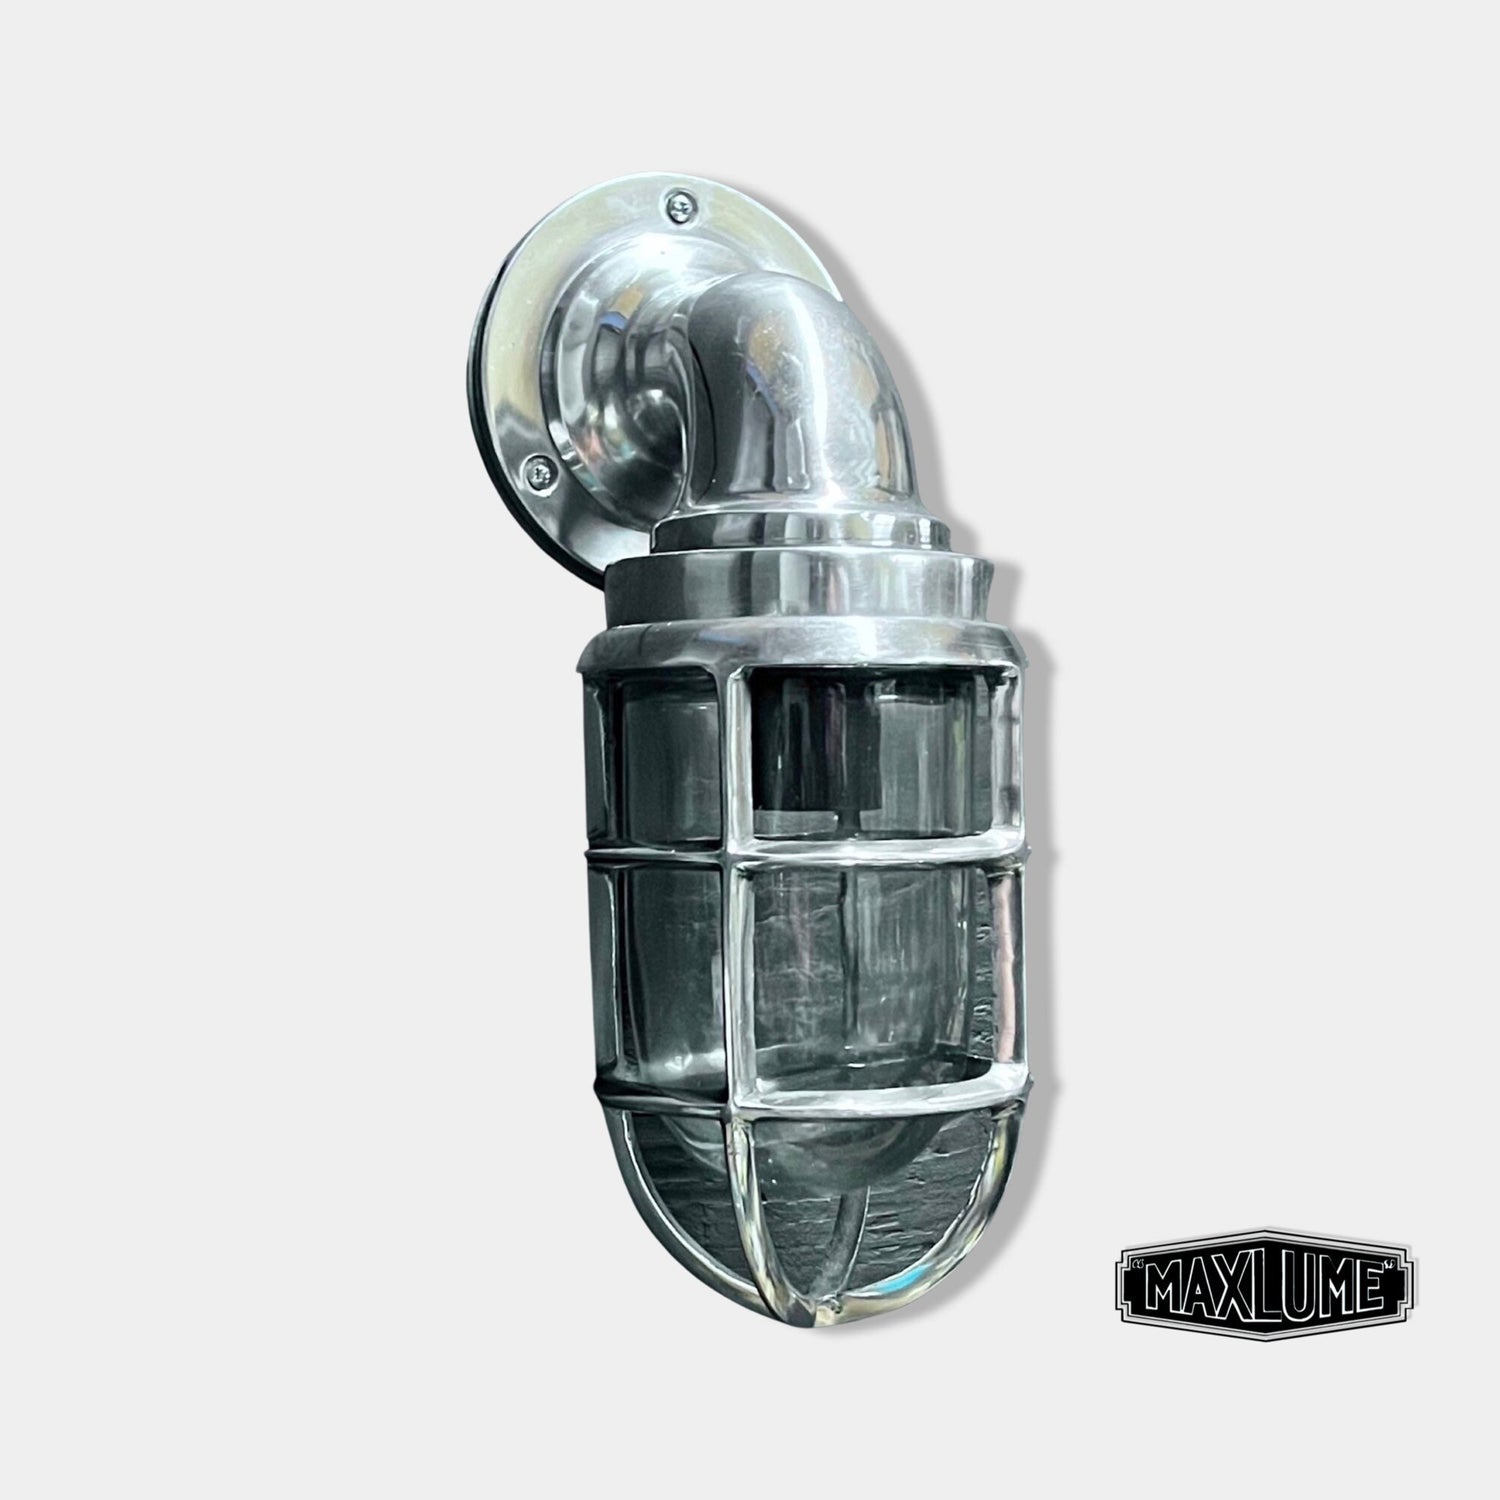 Beachamwell ~ Solid Caged Swan Neck Bulkhead Industrial Outdoor Garden & Bathroom Wall Light | Vintage Sconce Filament Bulb